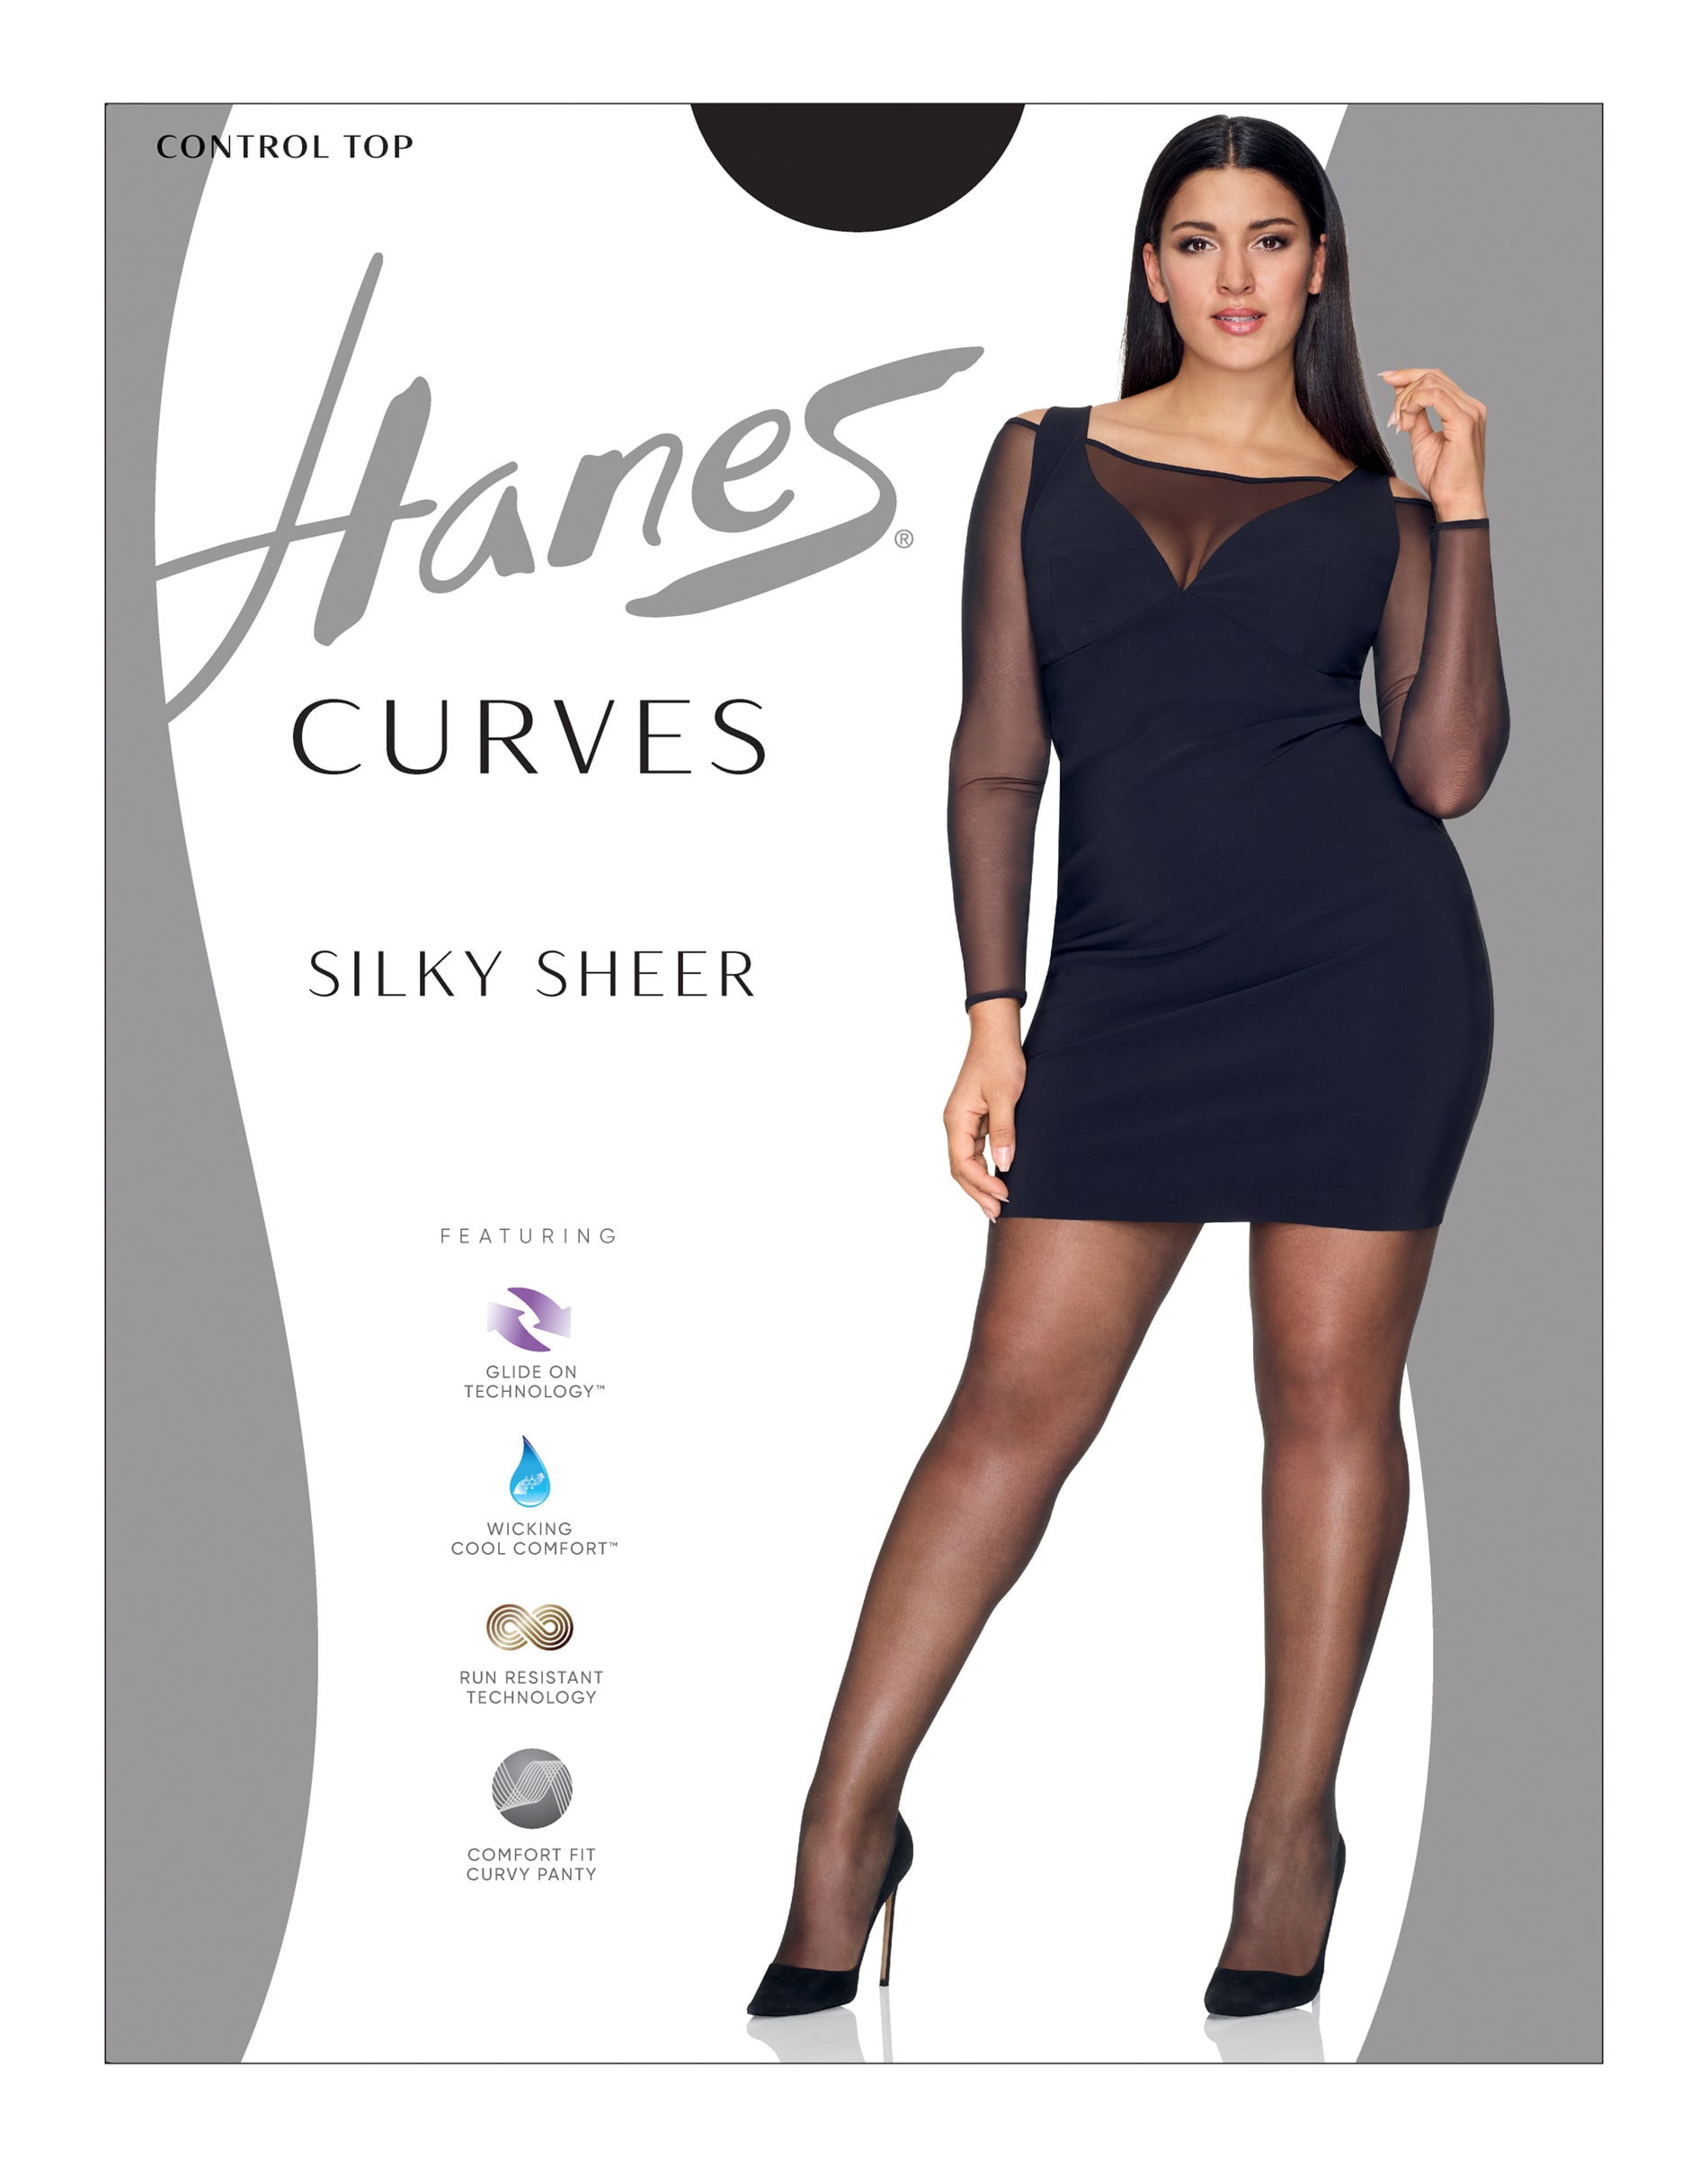 Hanes Curves Silky Sheer Control Top Legwear Nude 1X/2X